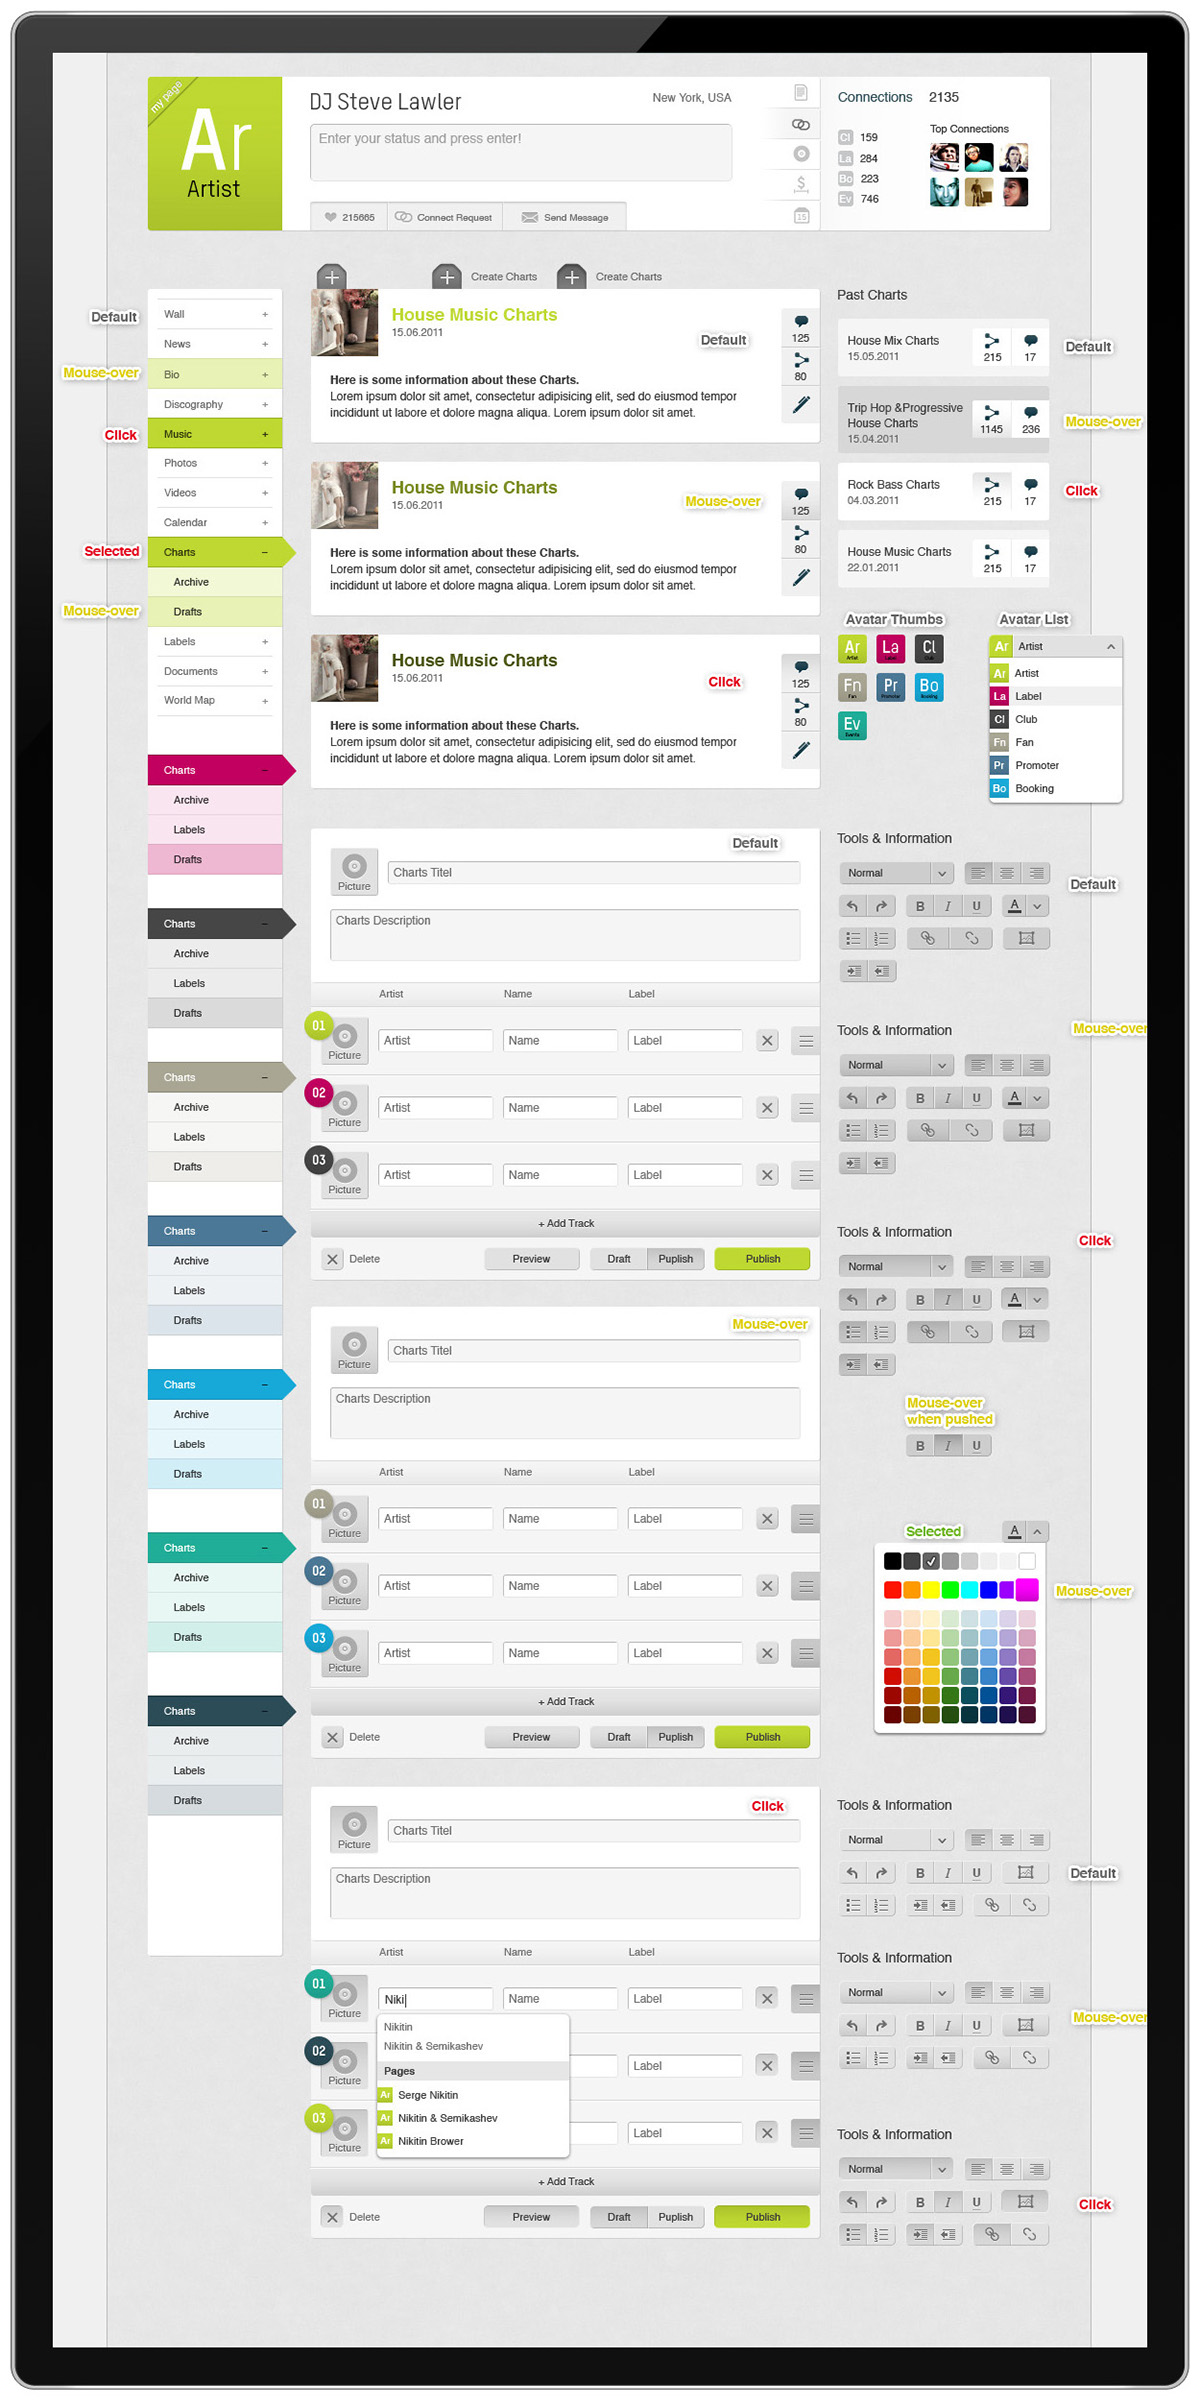 Corporate Design Interface UI ux information design labbler business community player